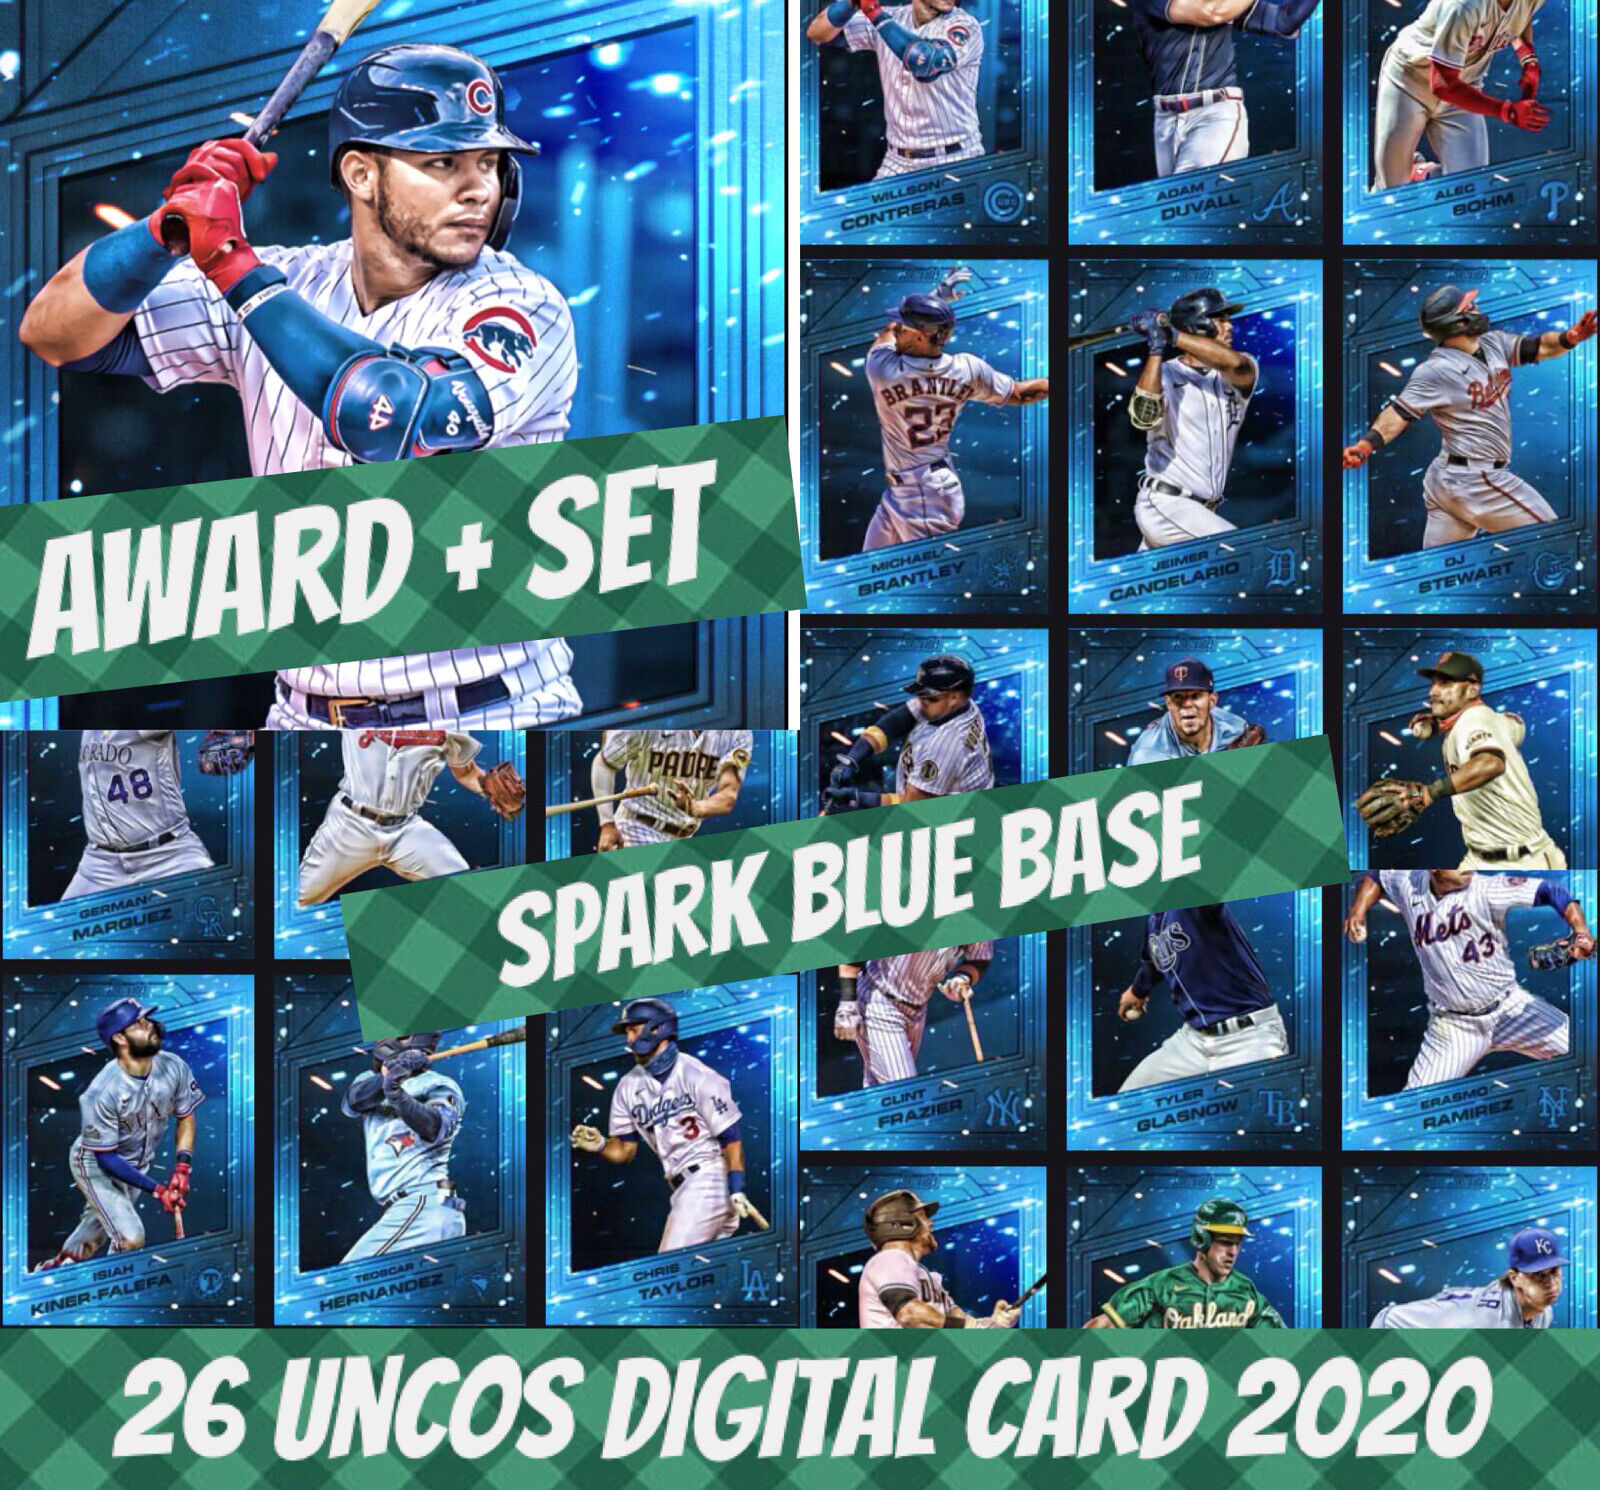 2020 Topps Bunt 20 Willson Contreras Unco Award + Set (1+25) Spark Base Digital